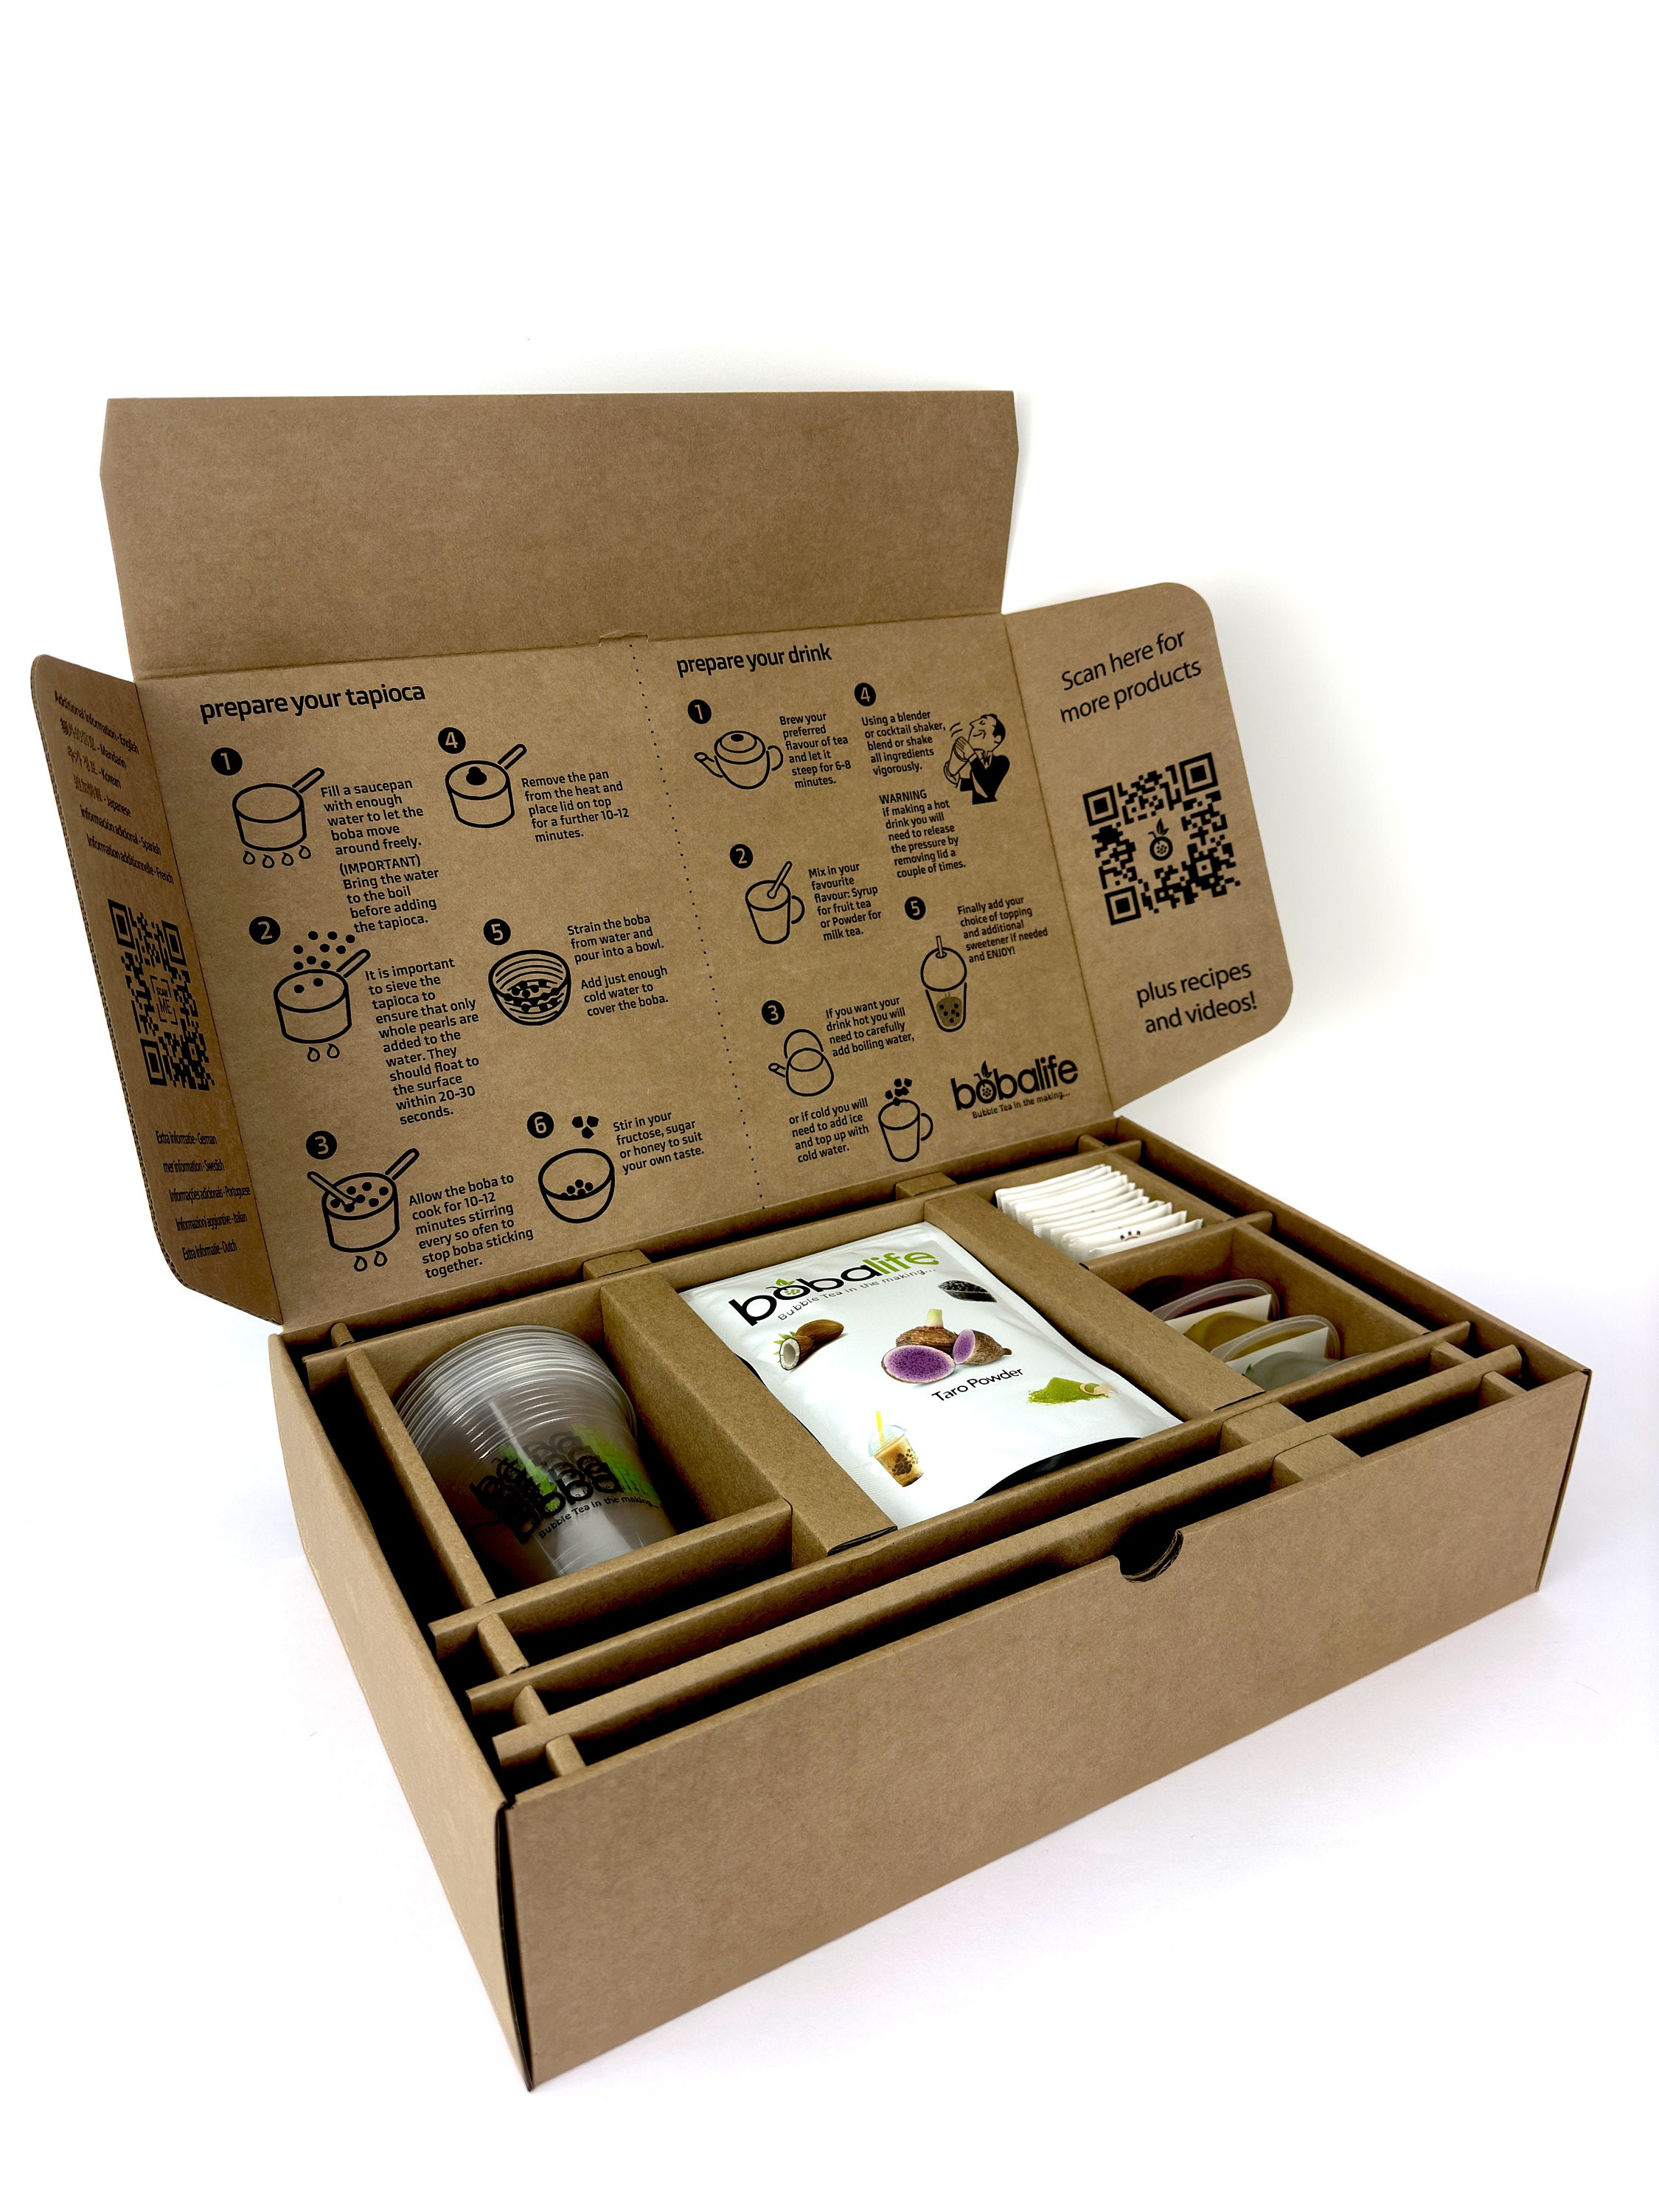 Bubble Tea Kit Gift Box Traditional Selection Makes 12 Drinks